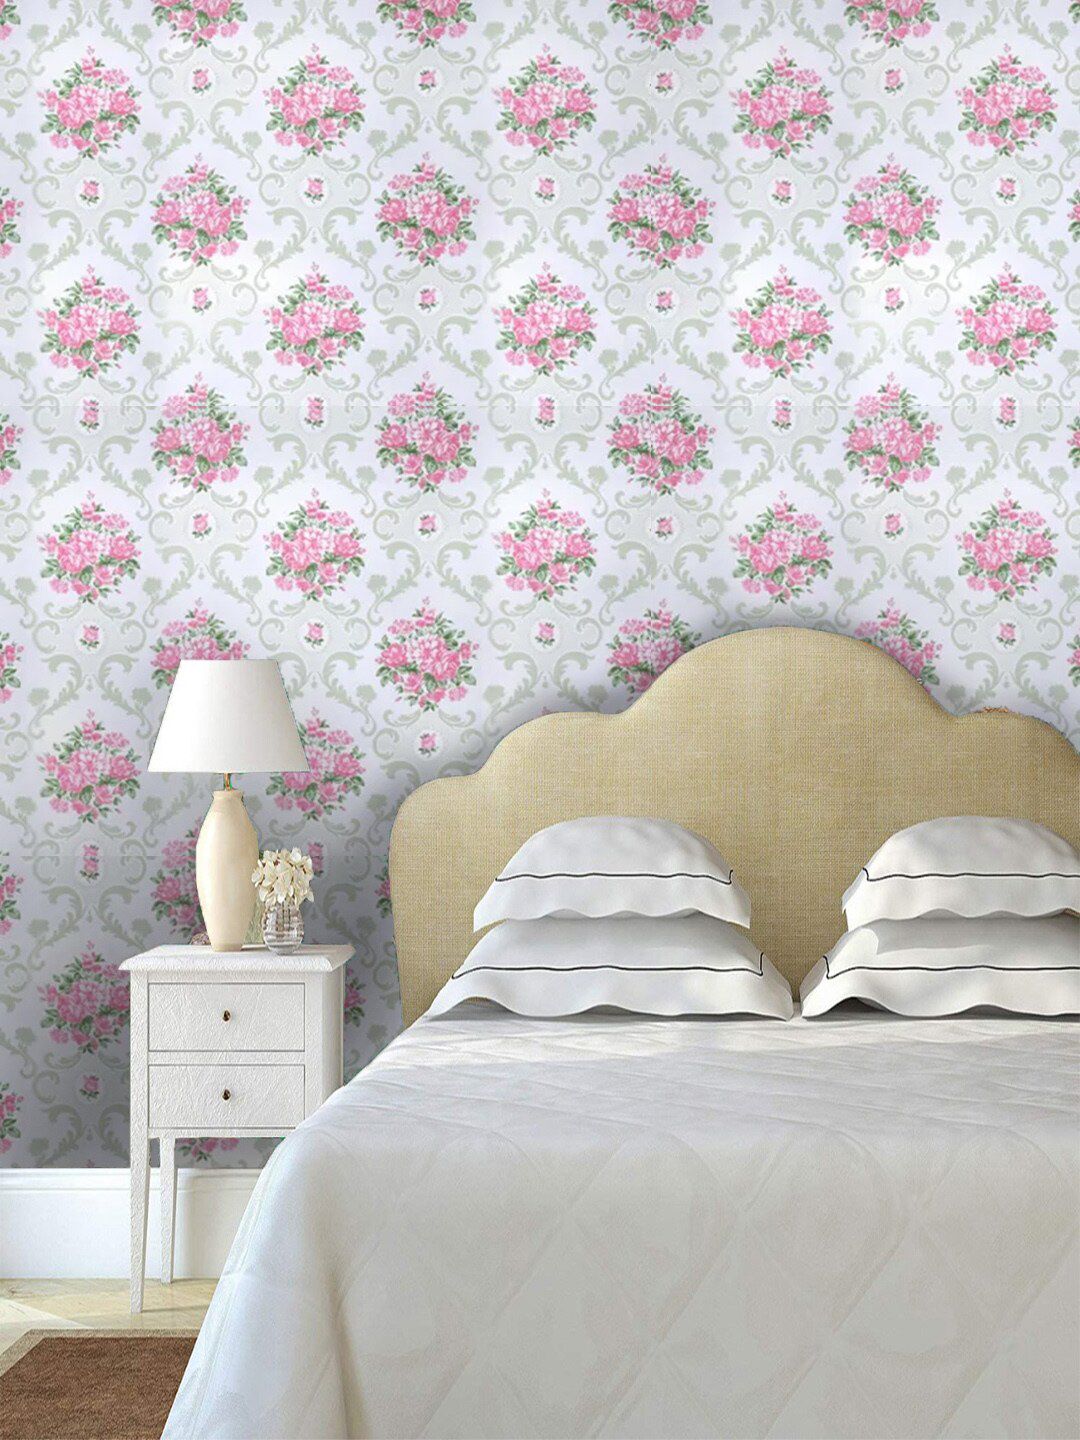 Jaamso Royals Pink & Green Floral Self-Adhesive Waterproof Wallpaper Price in India